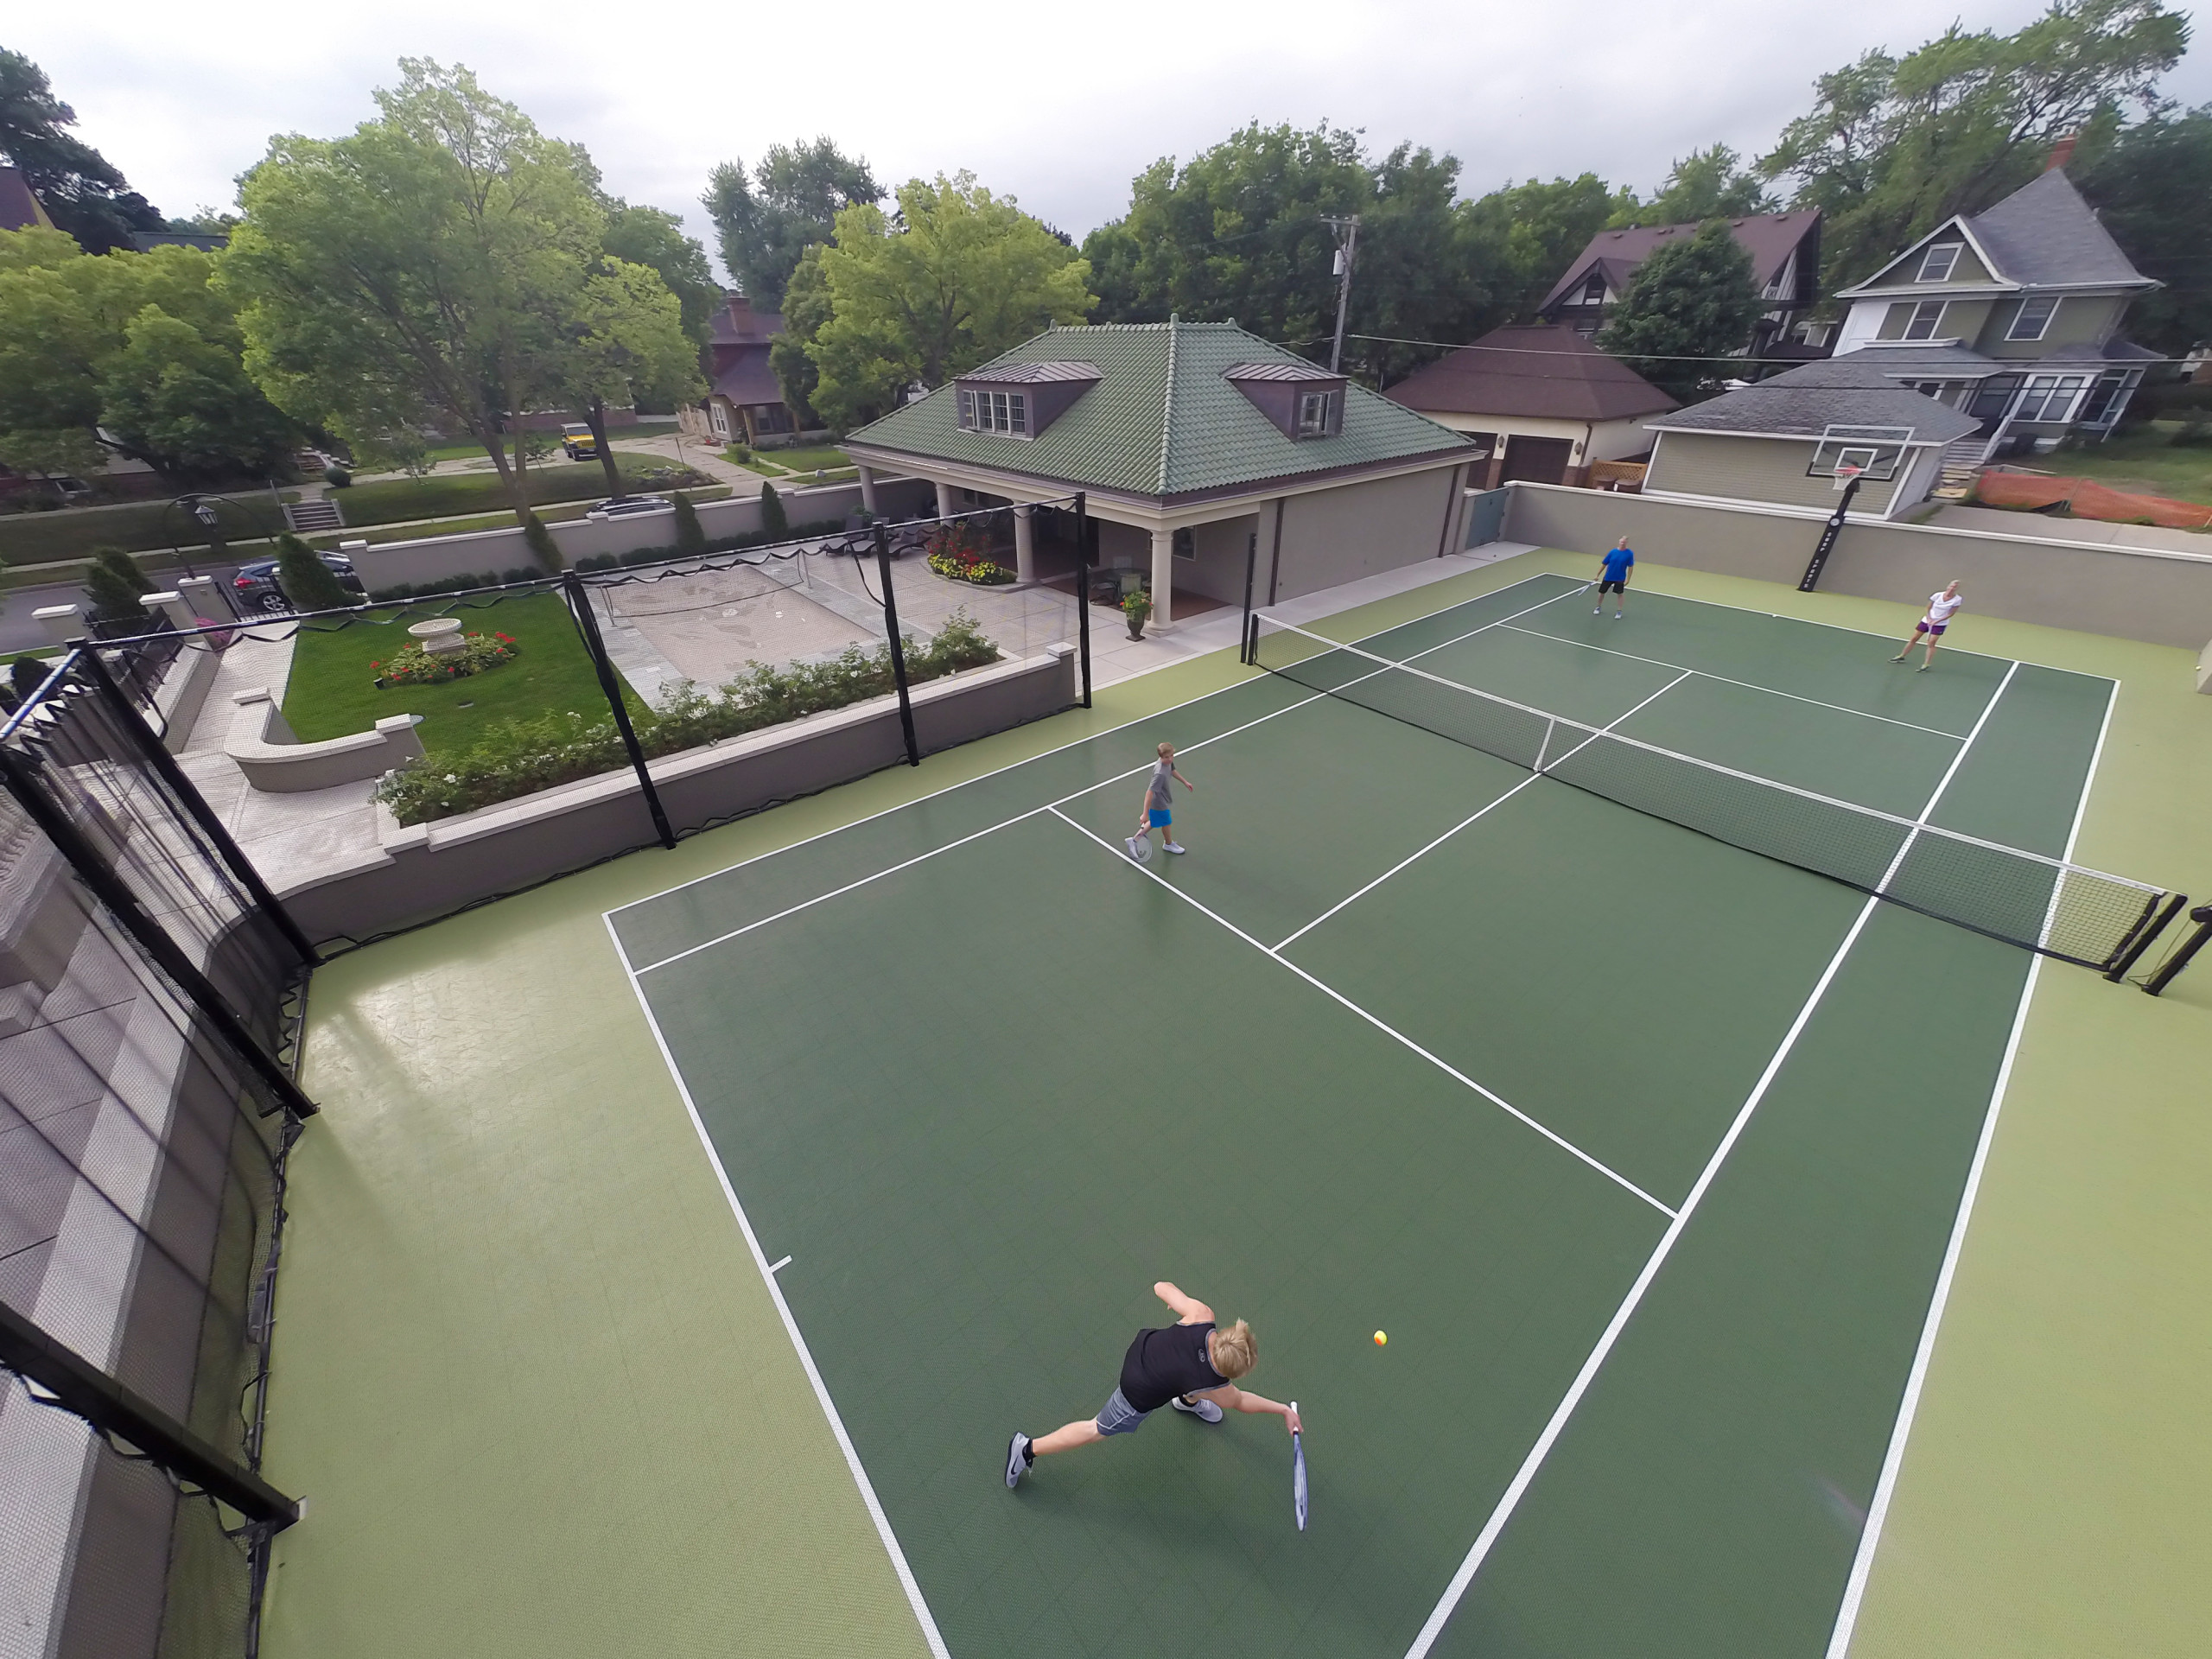 Residential Tennis Court - Photos & Ideas | Houzz